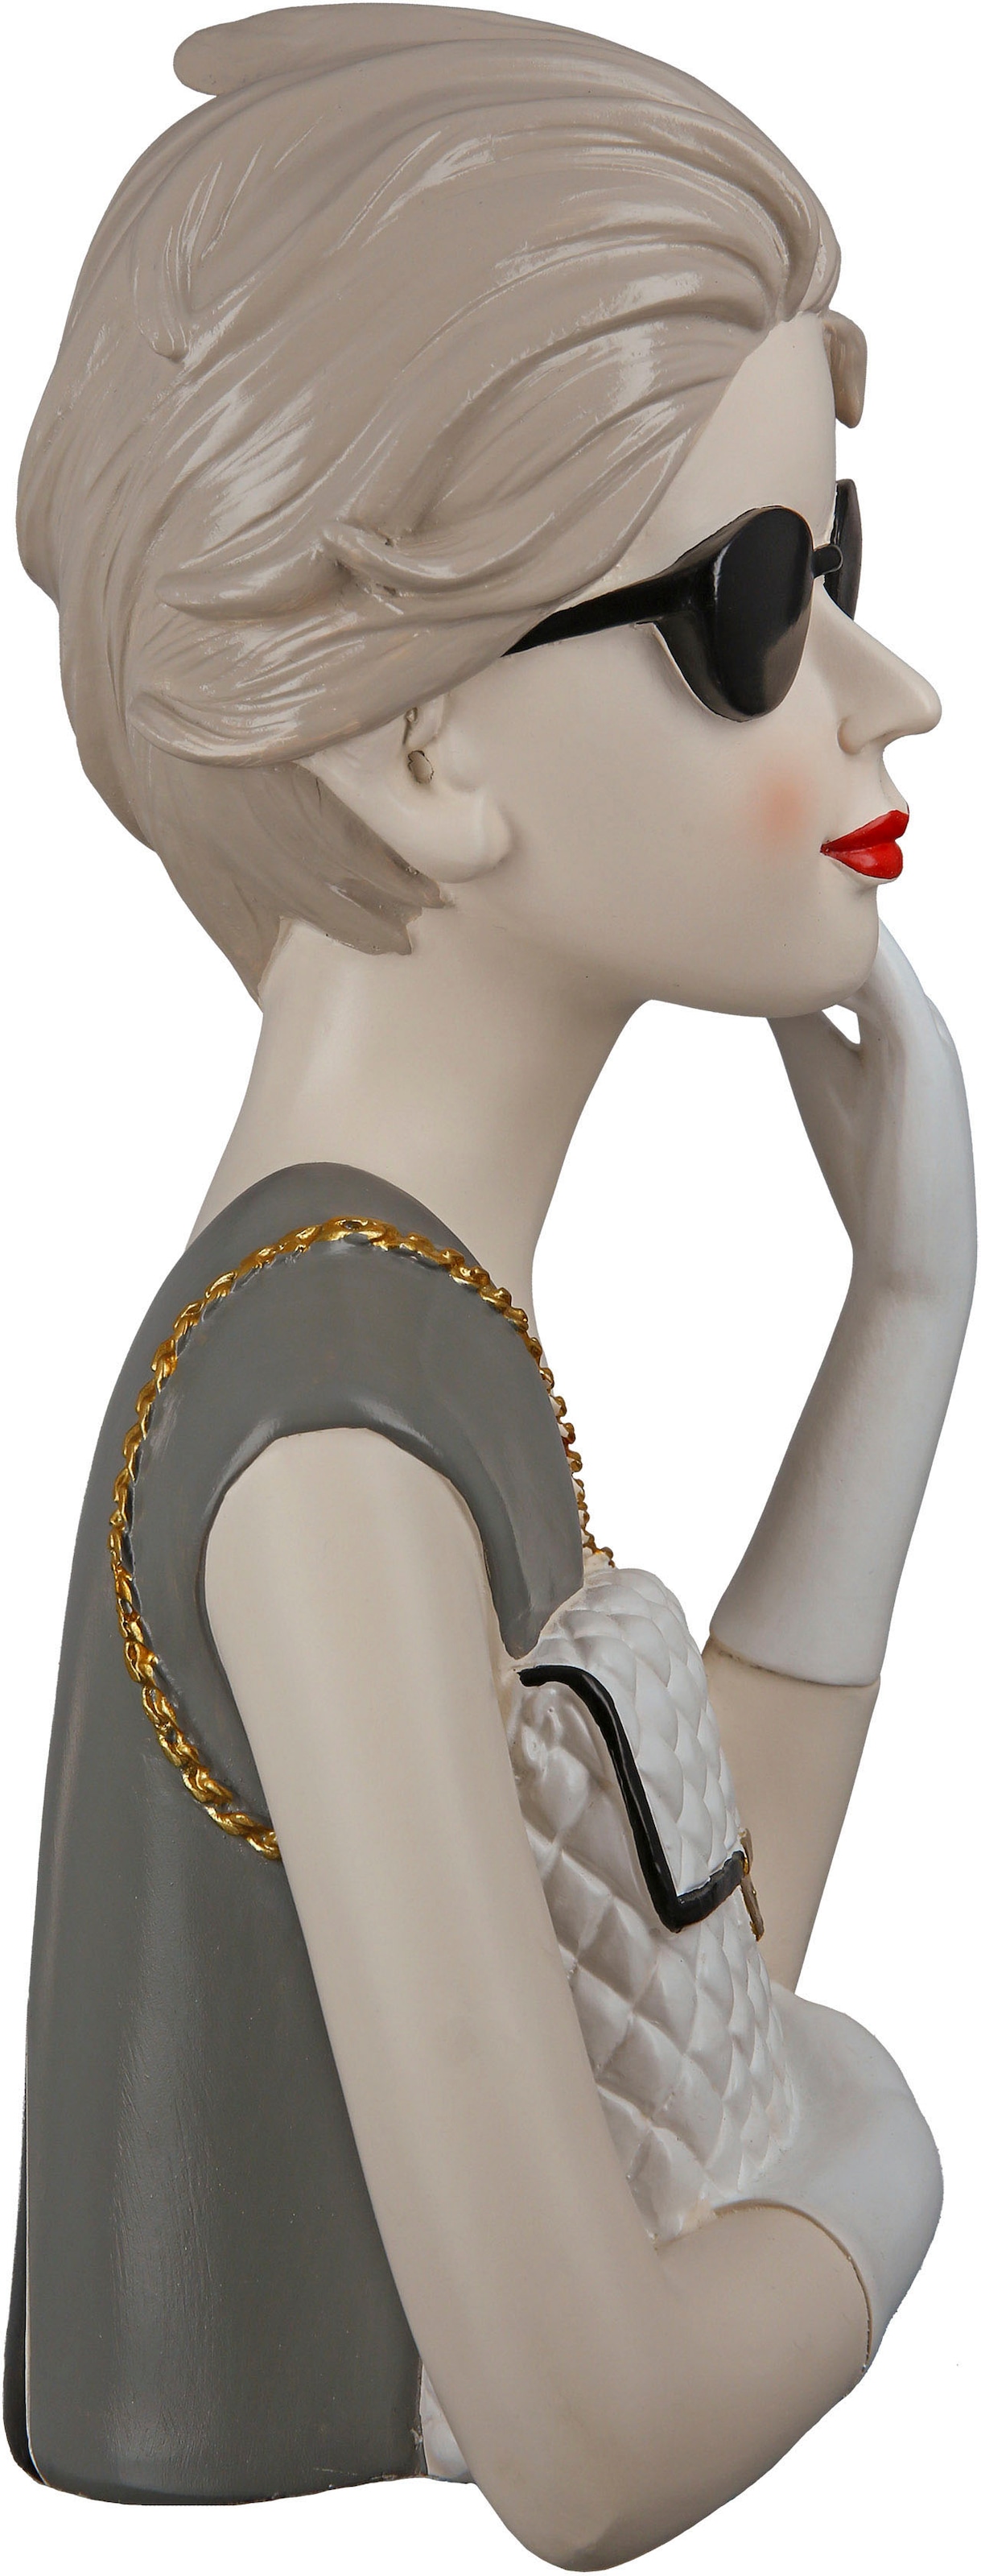 GILDE Dekofigur »Figur Handtasche« mit Lady online bestellen